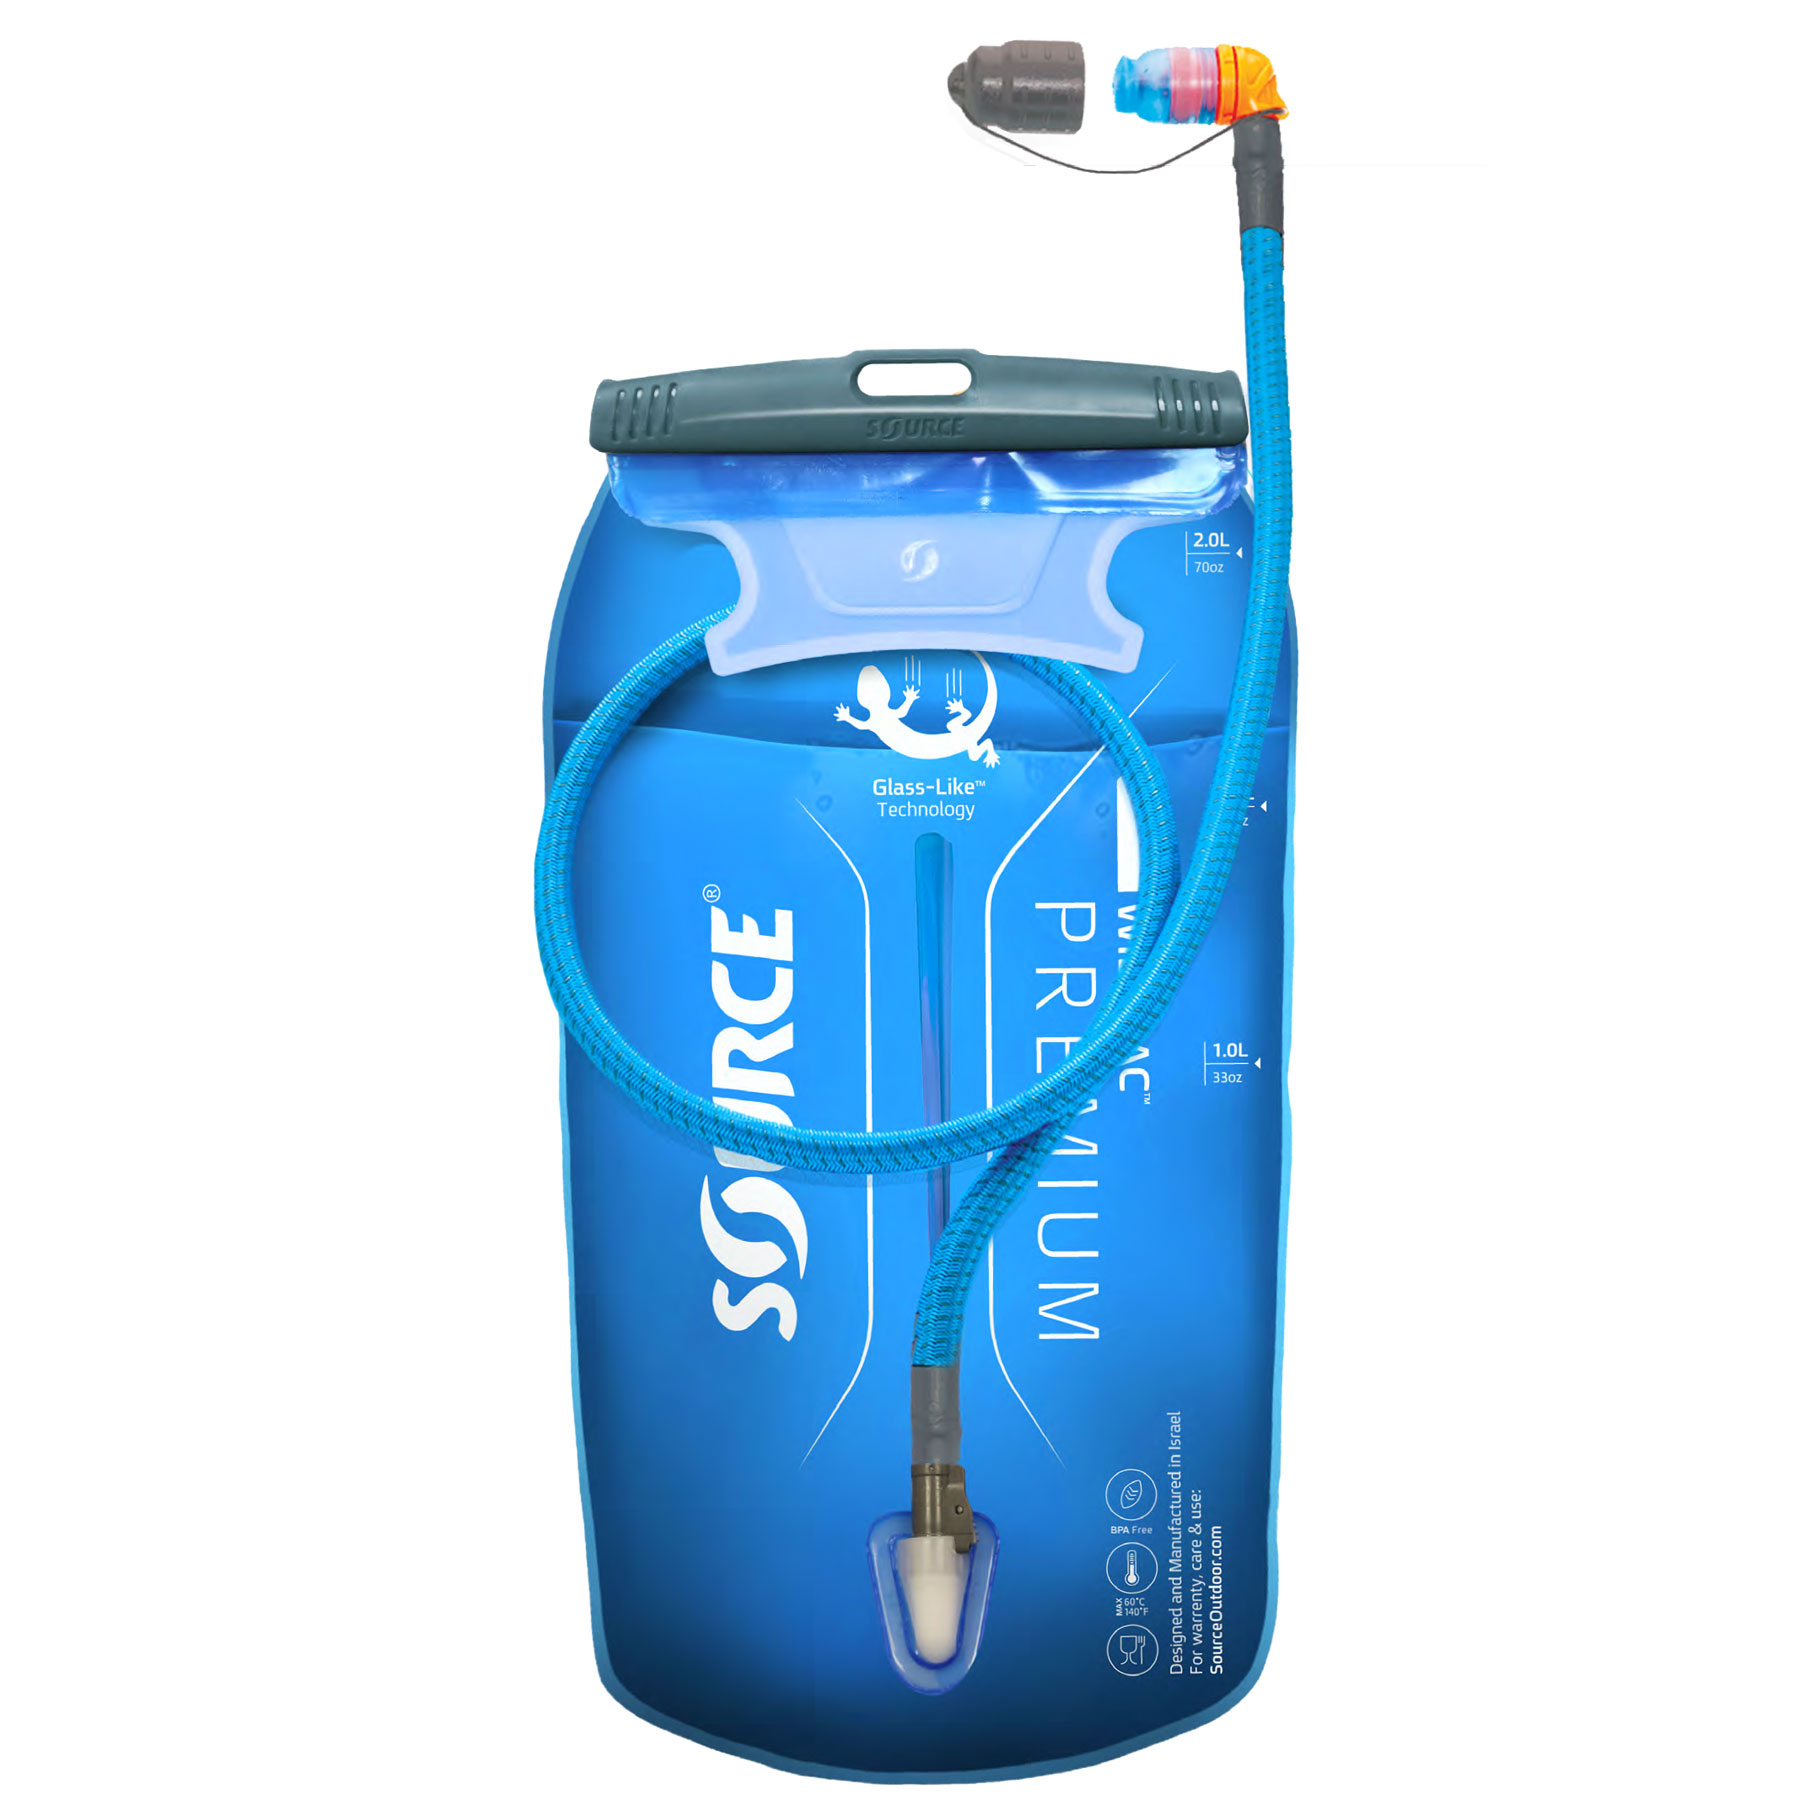 Productfoto van Source Widepac Premium Drinkzak 2 L - alpine blue